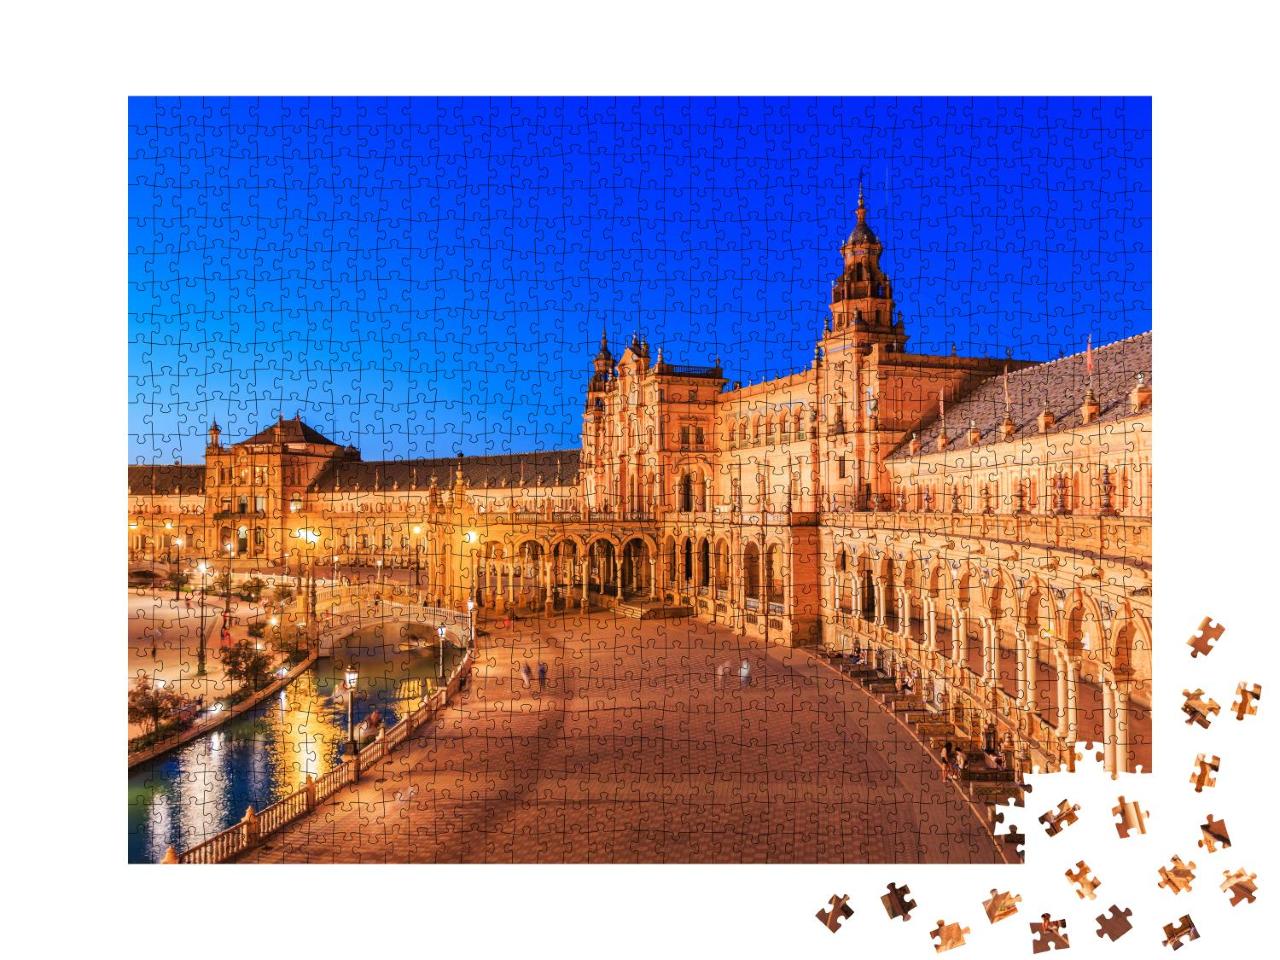 Puzzle 1000 Teile „Sevilla, Spanien, Plaza de España“